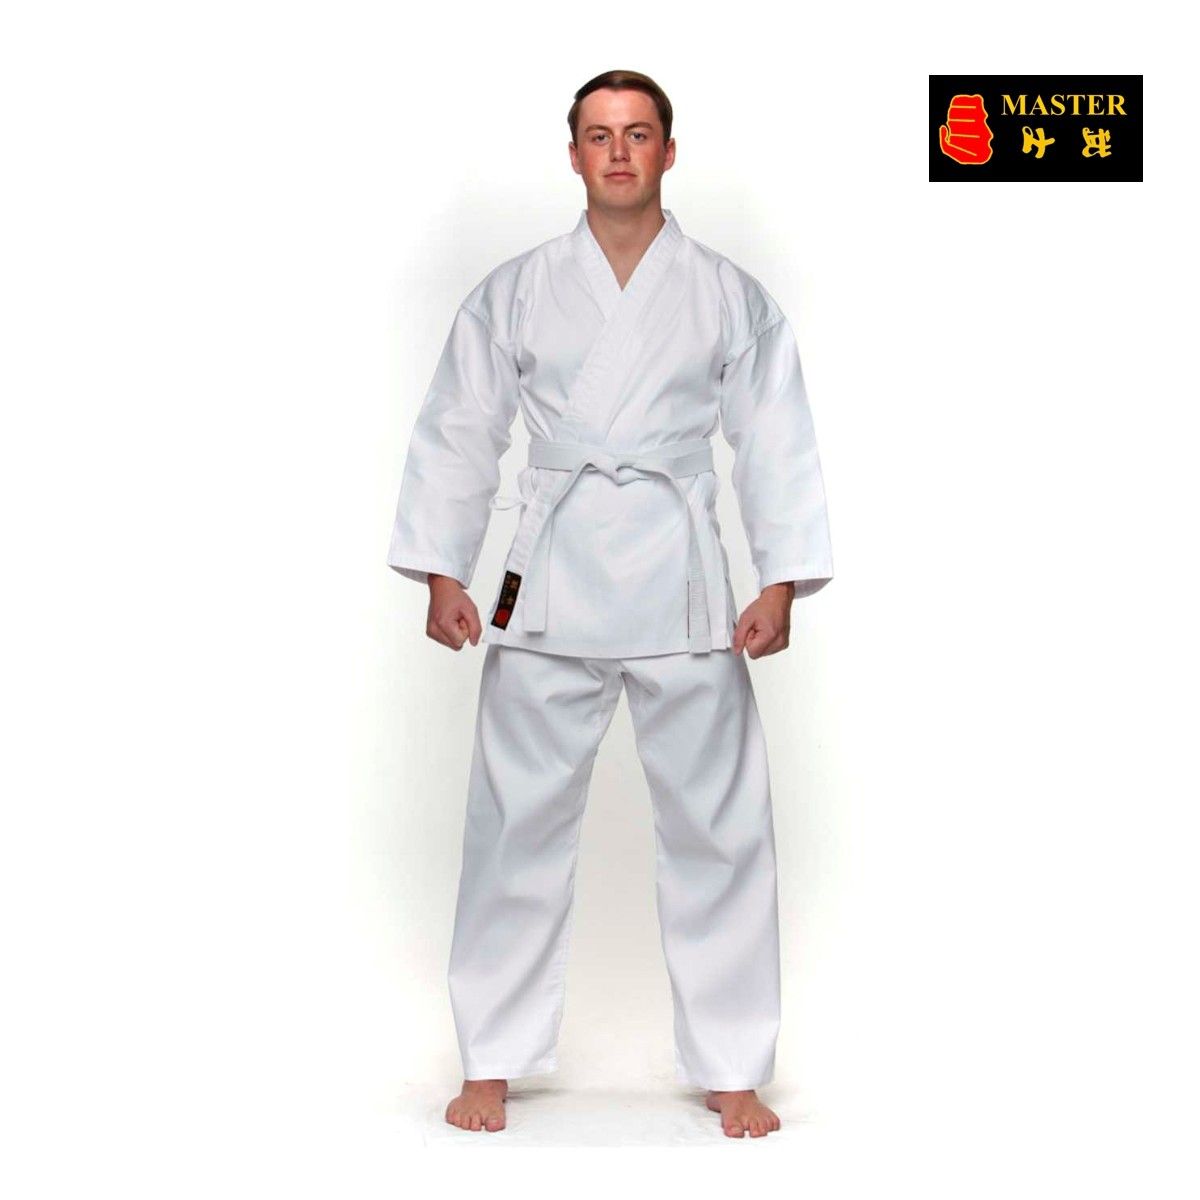 Karategi Training Master per allenamento adulto o bambino per Karate